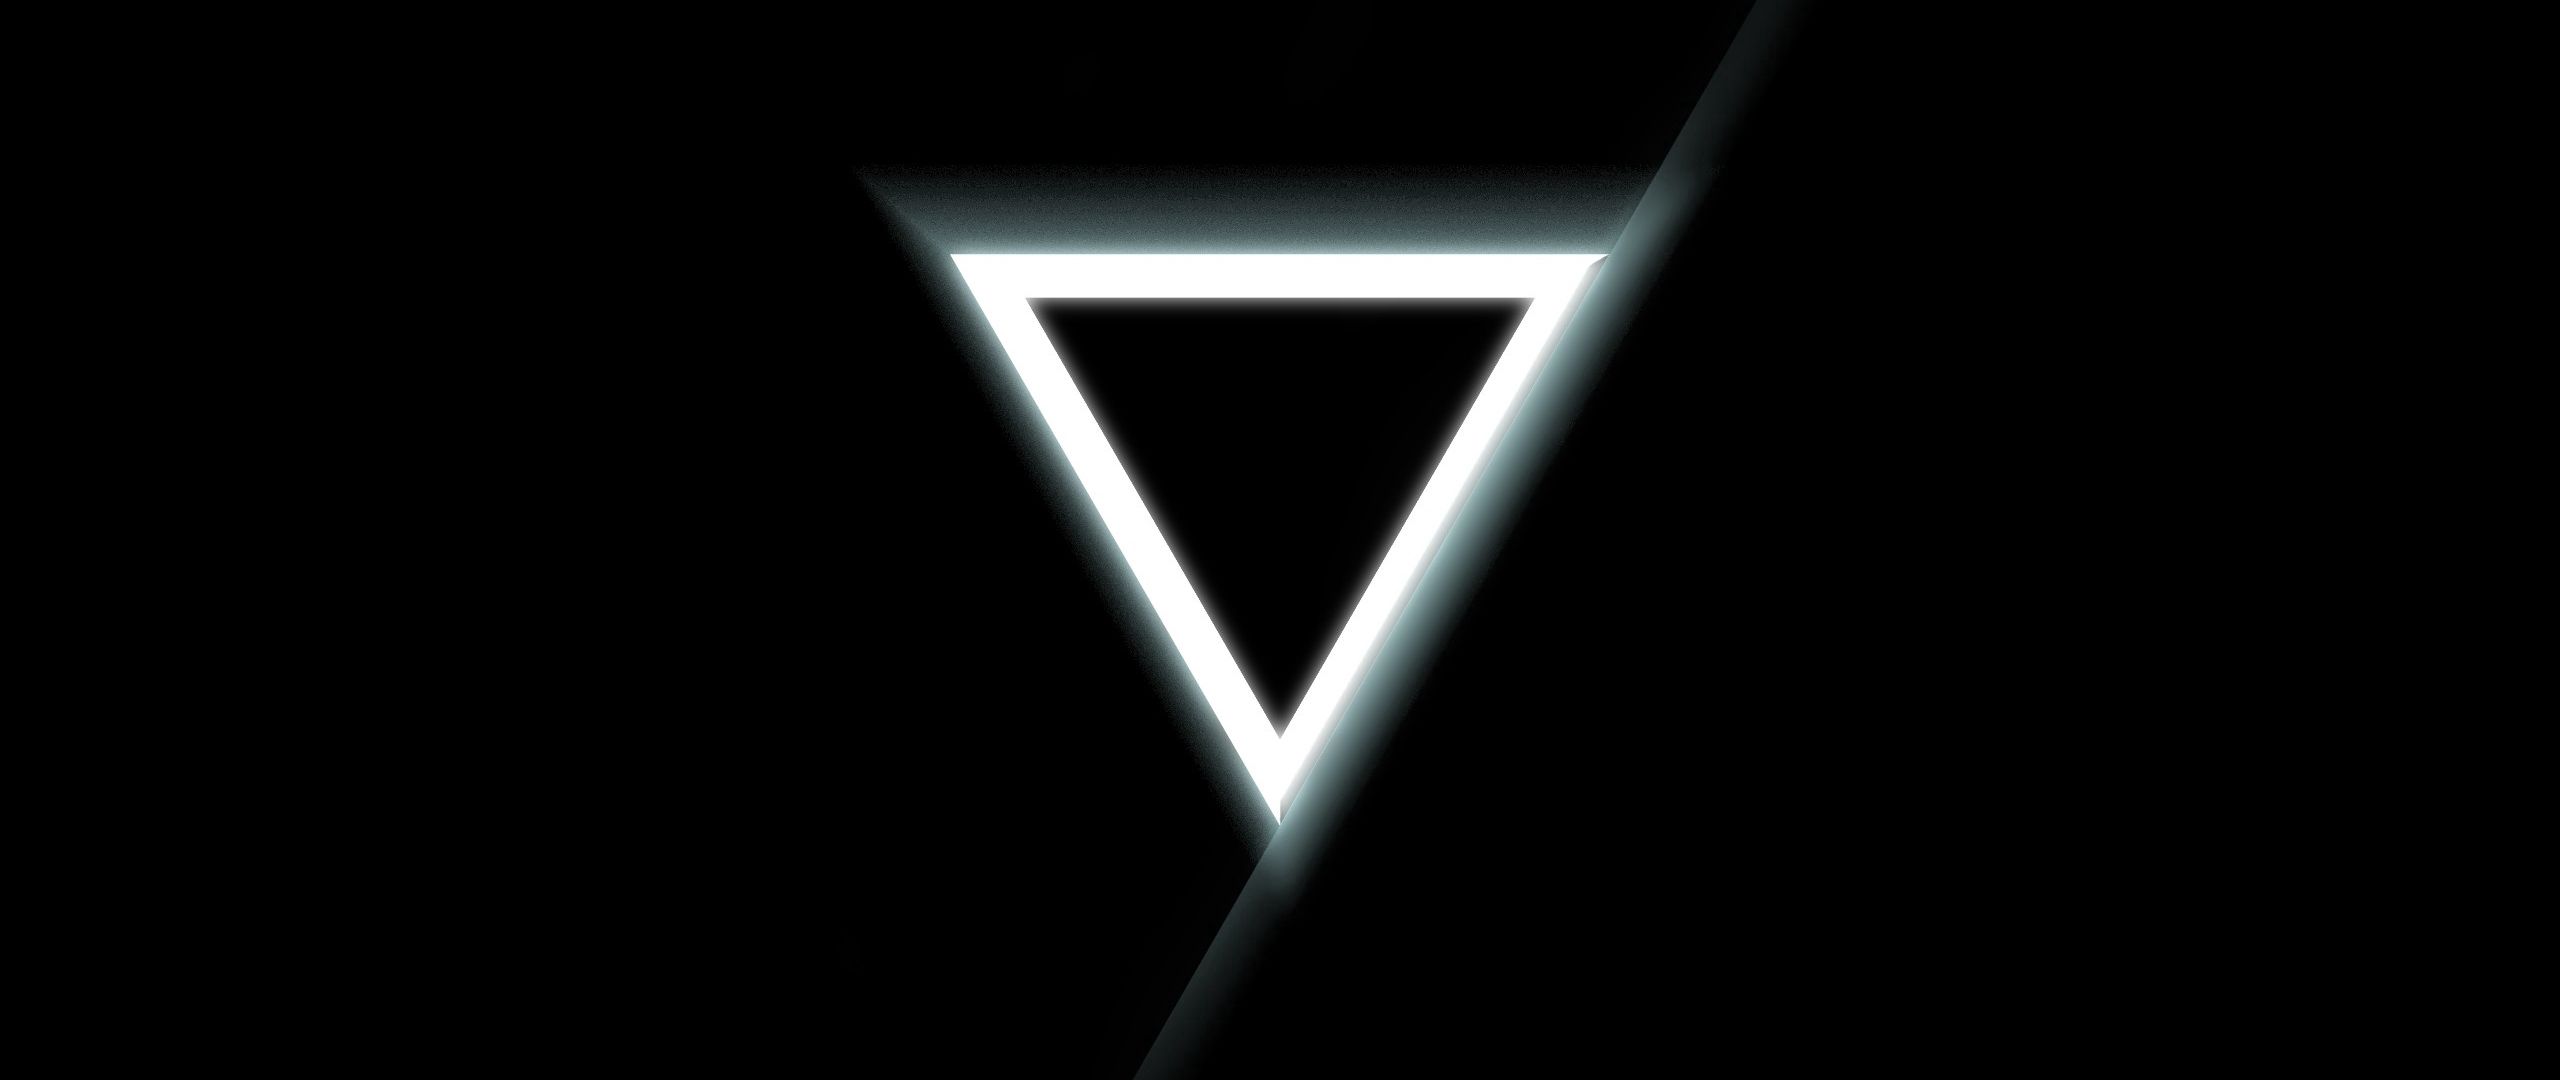 2560x1080 Wallpaper triangle, inverted, black, white